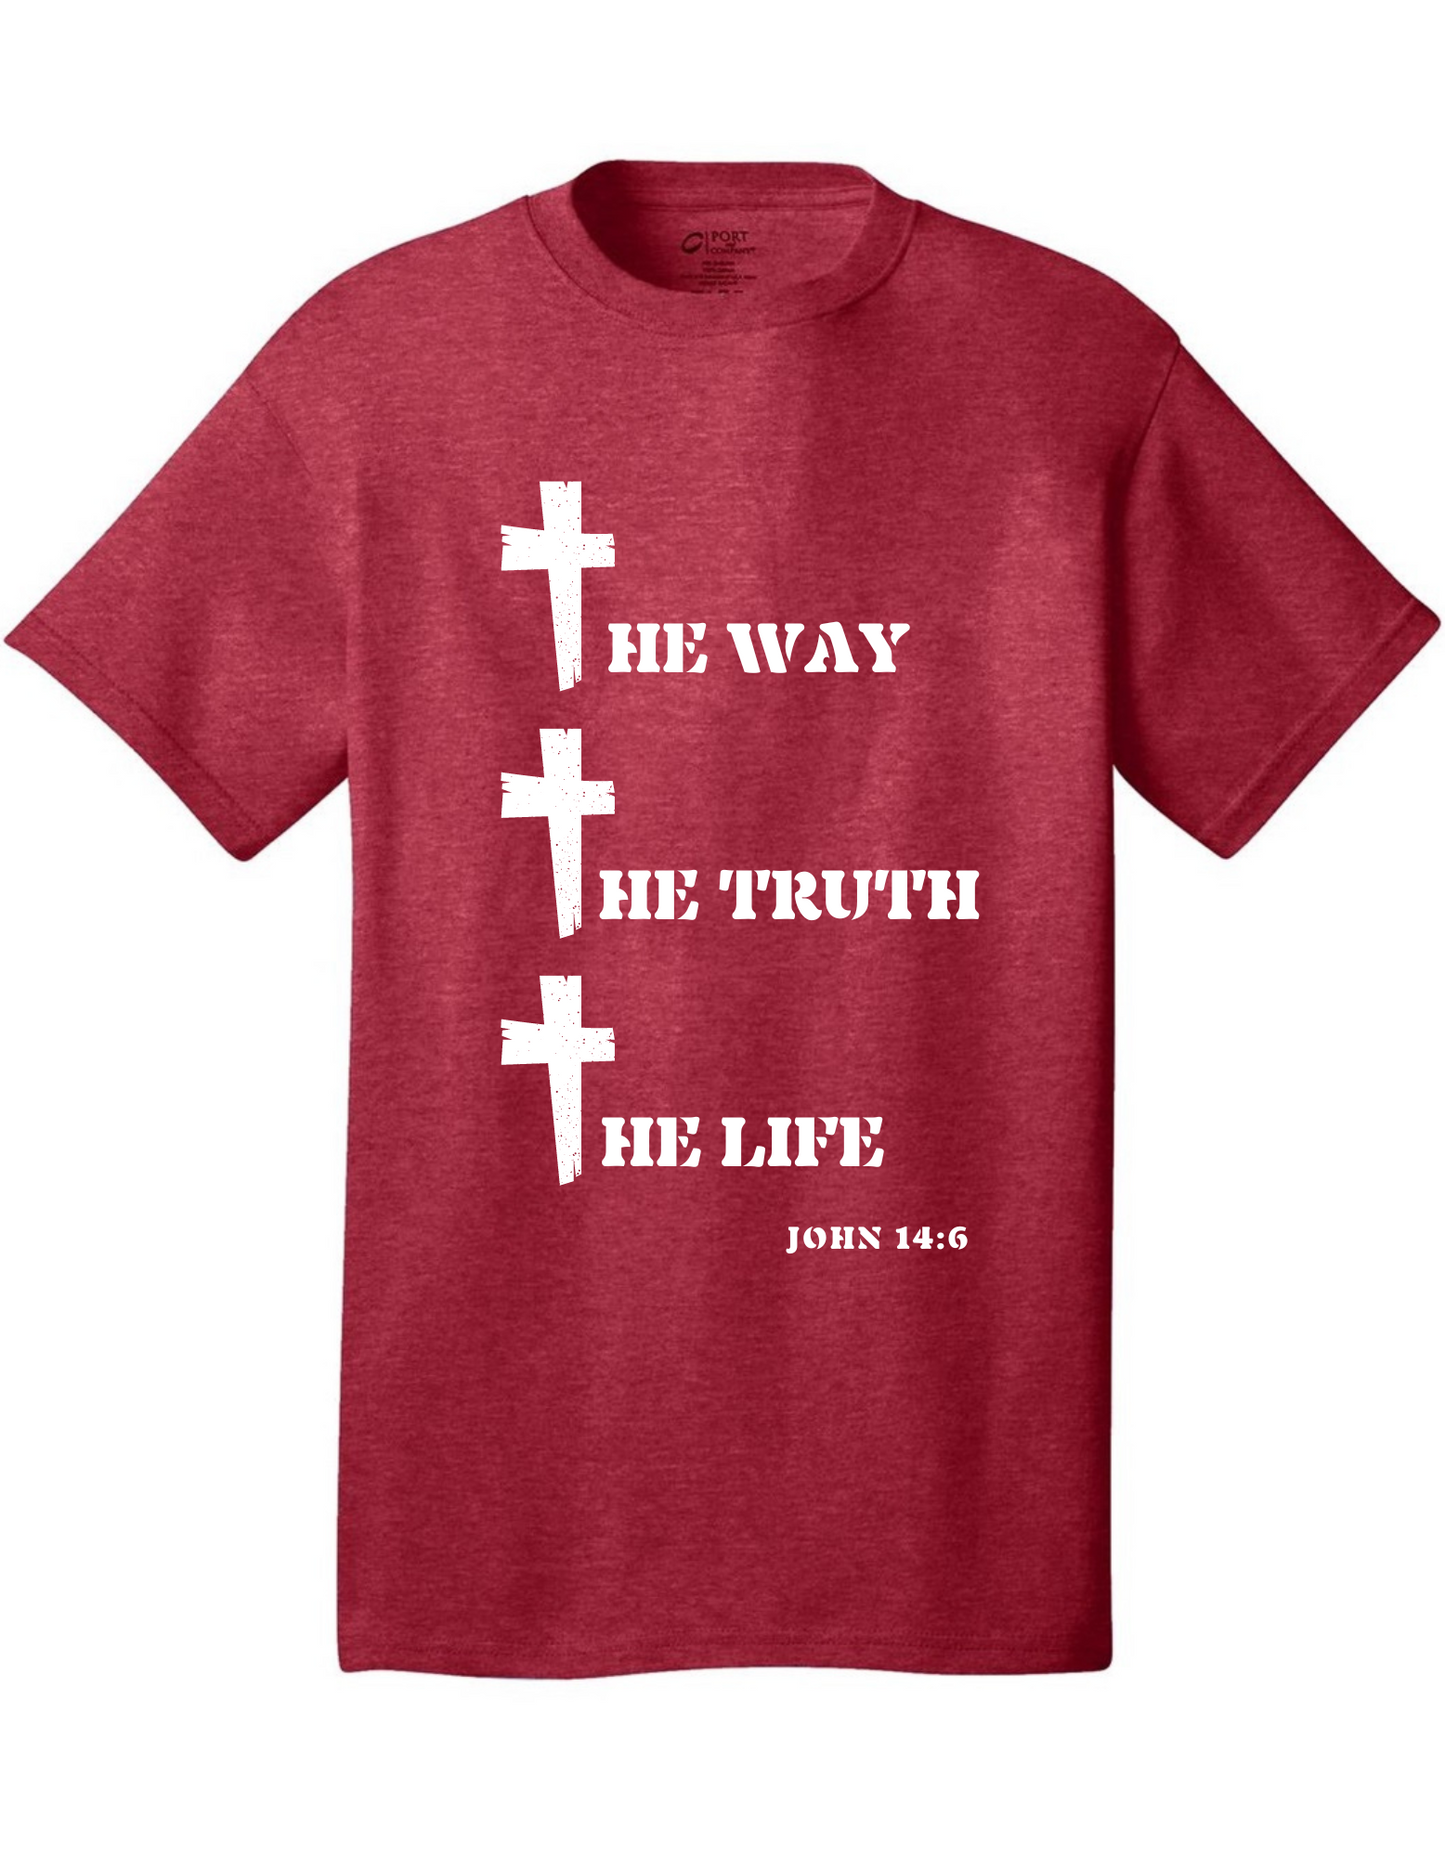 The Way | T-Shirt